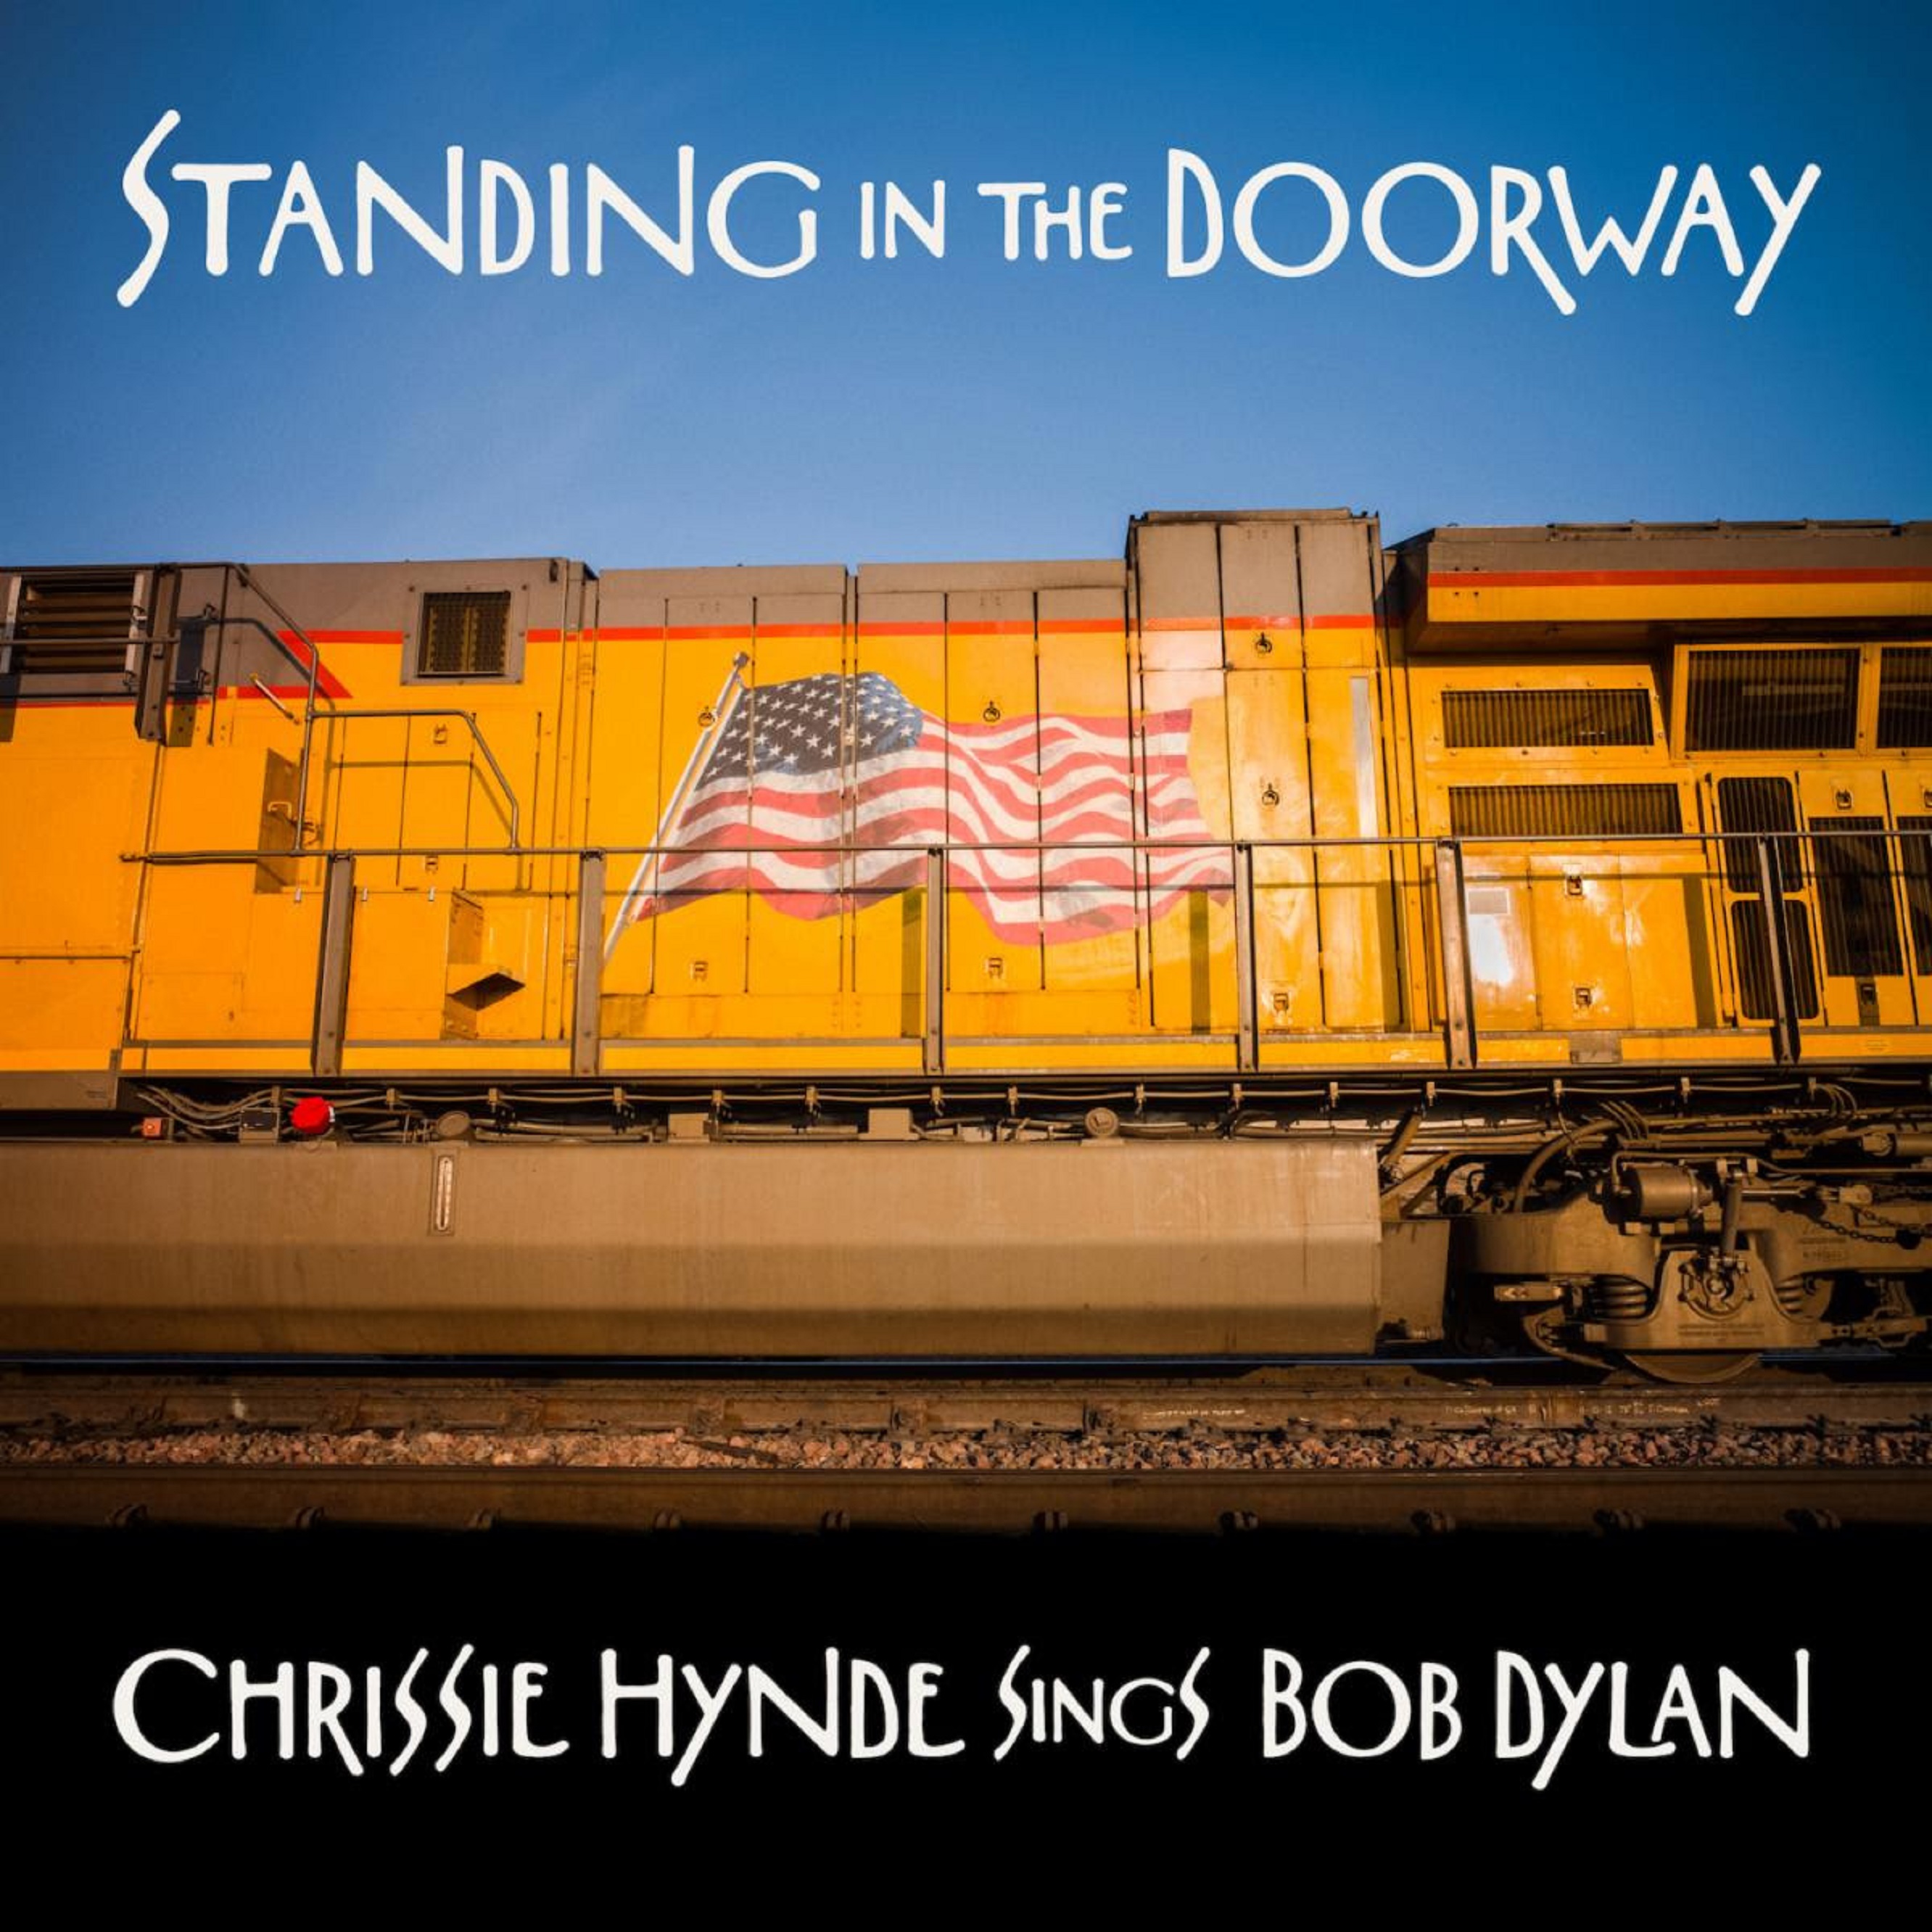 Chrissie Hynde sings Dylan livestream Dec 26